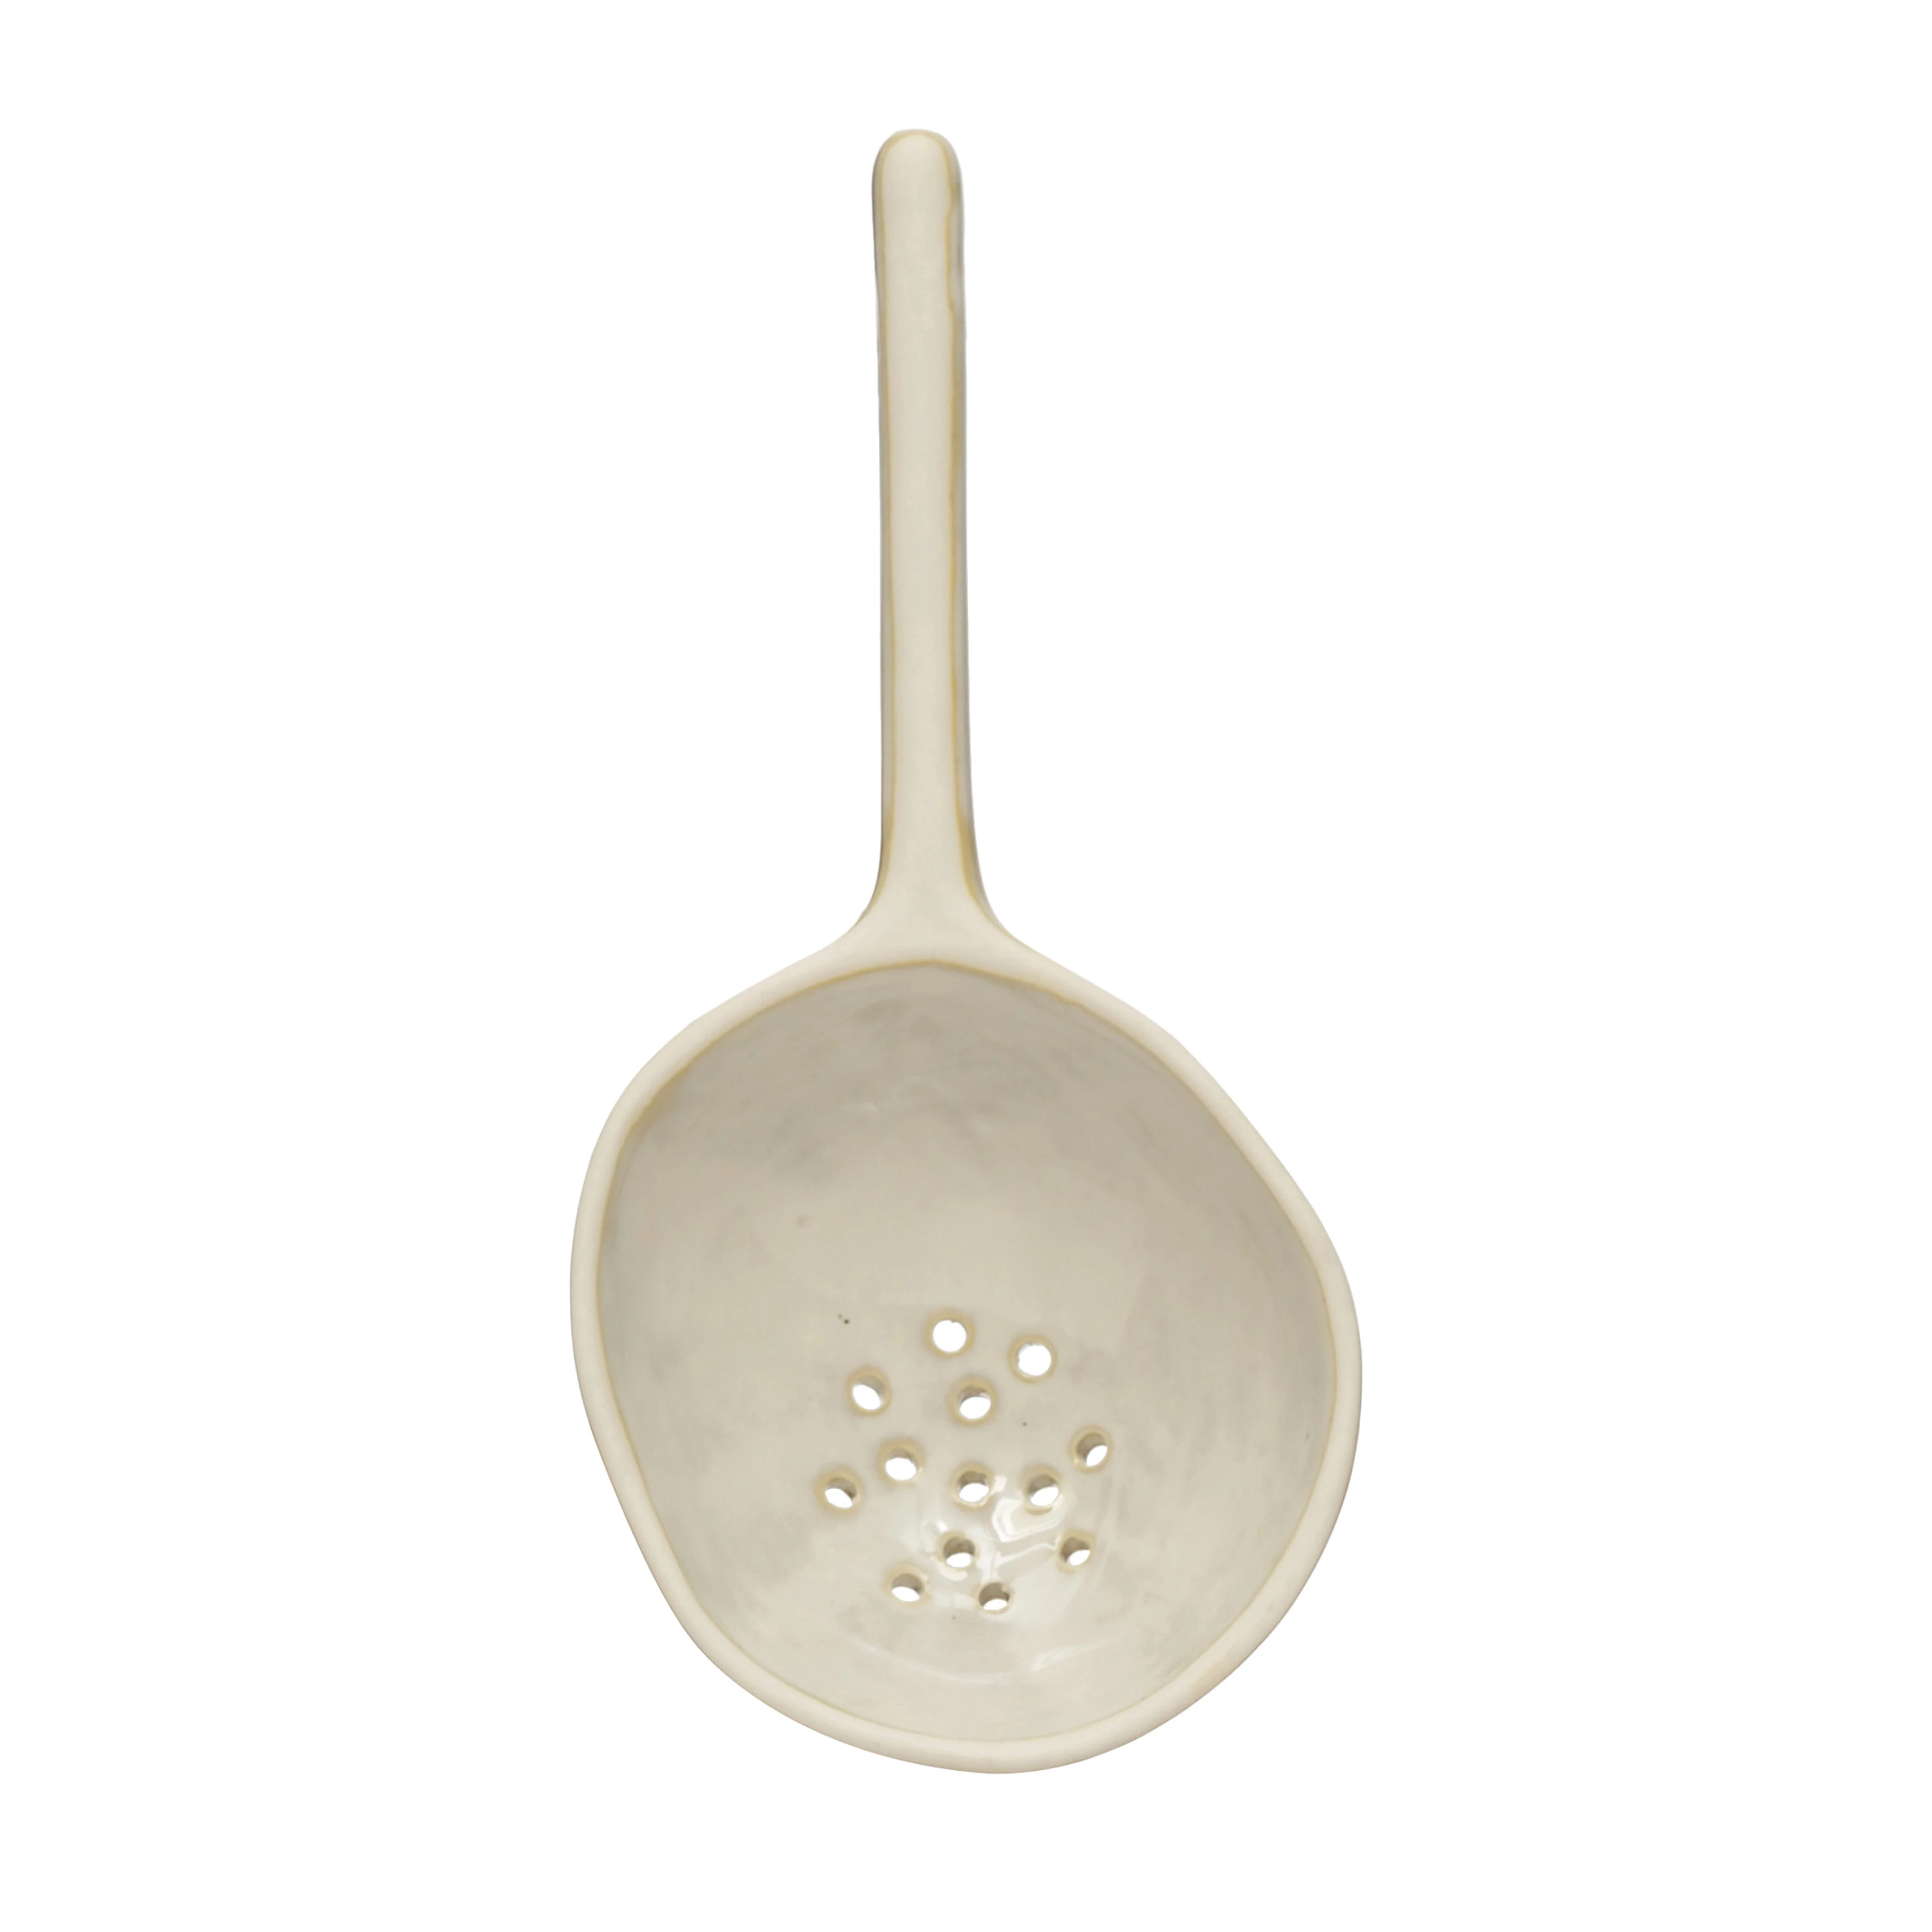 Stoneware Strainer Spoon, Reactive Glaze